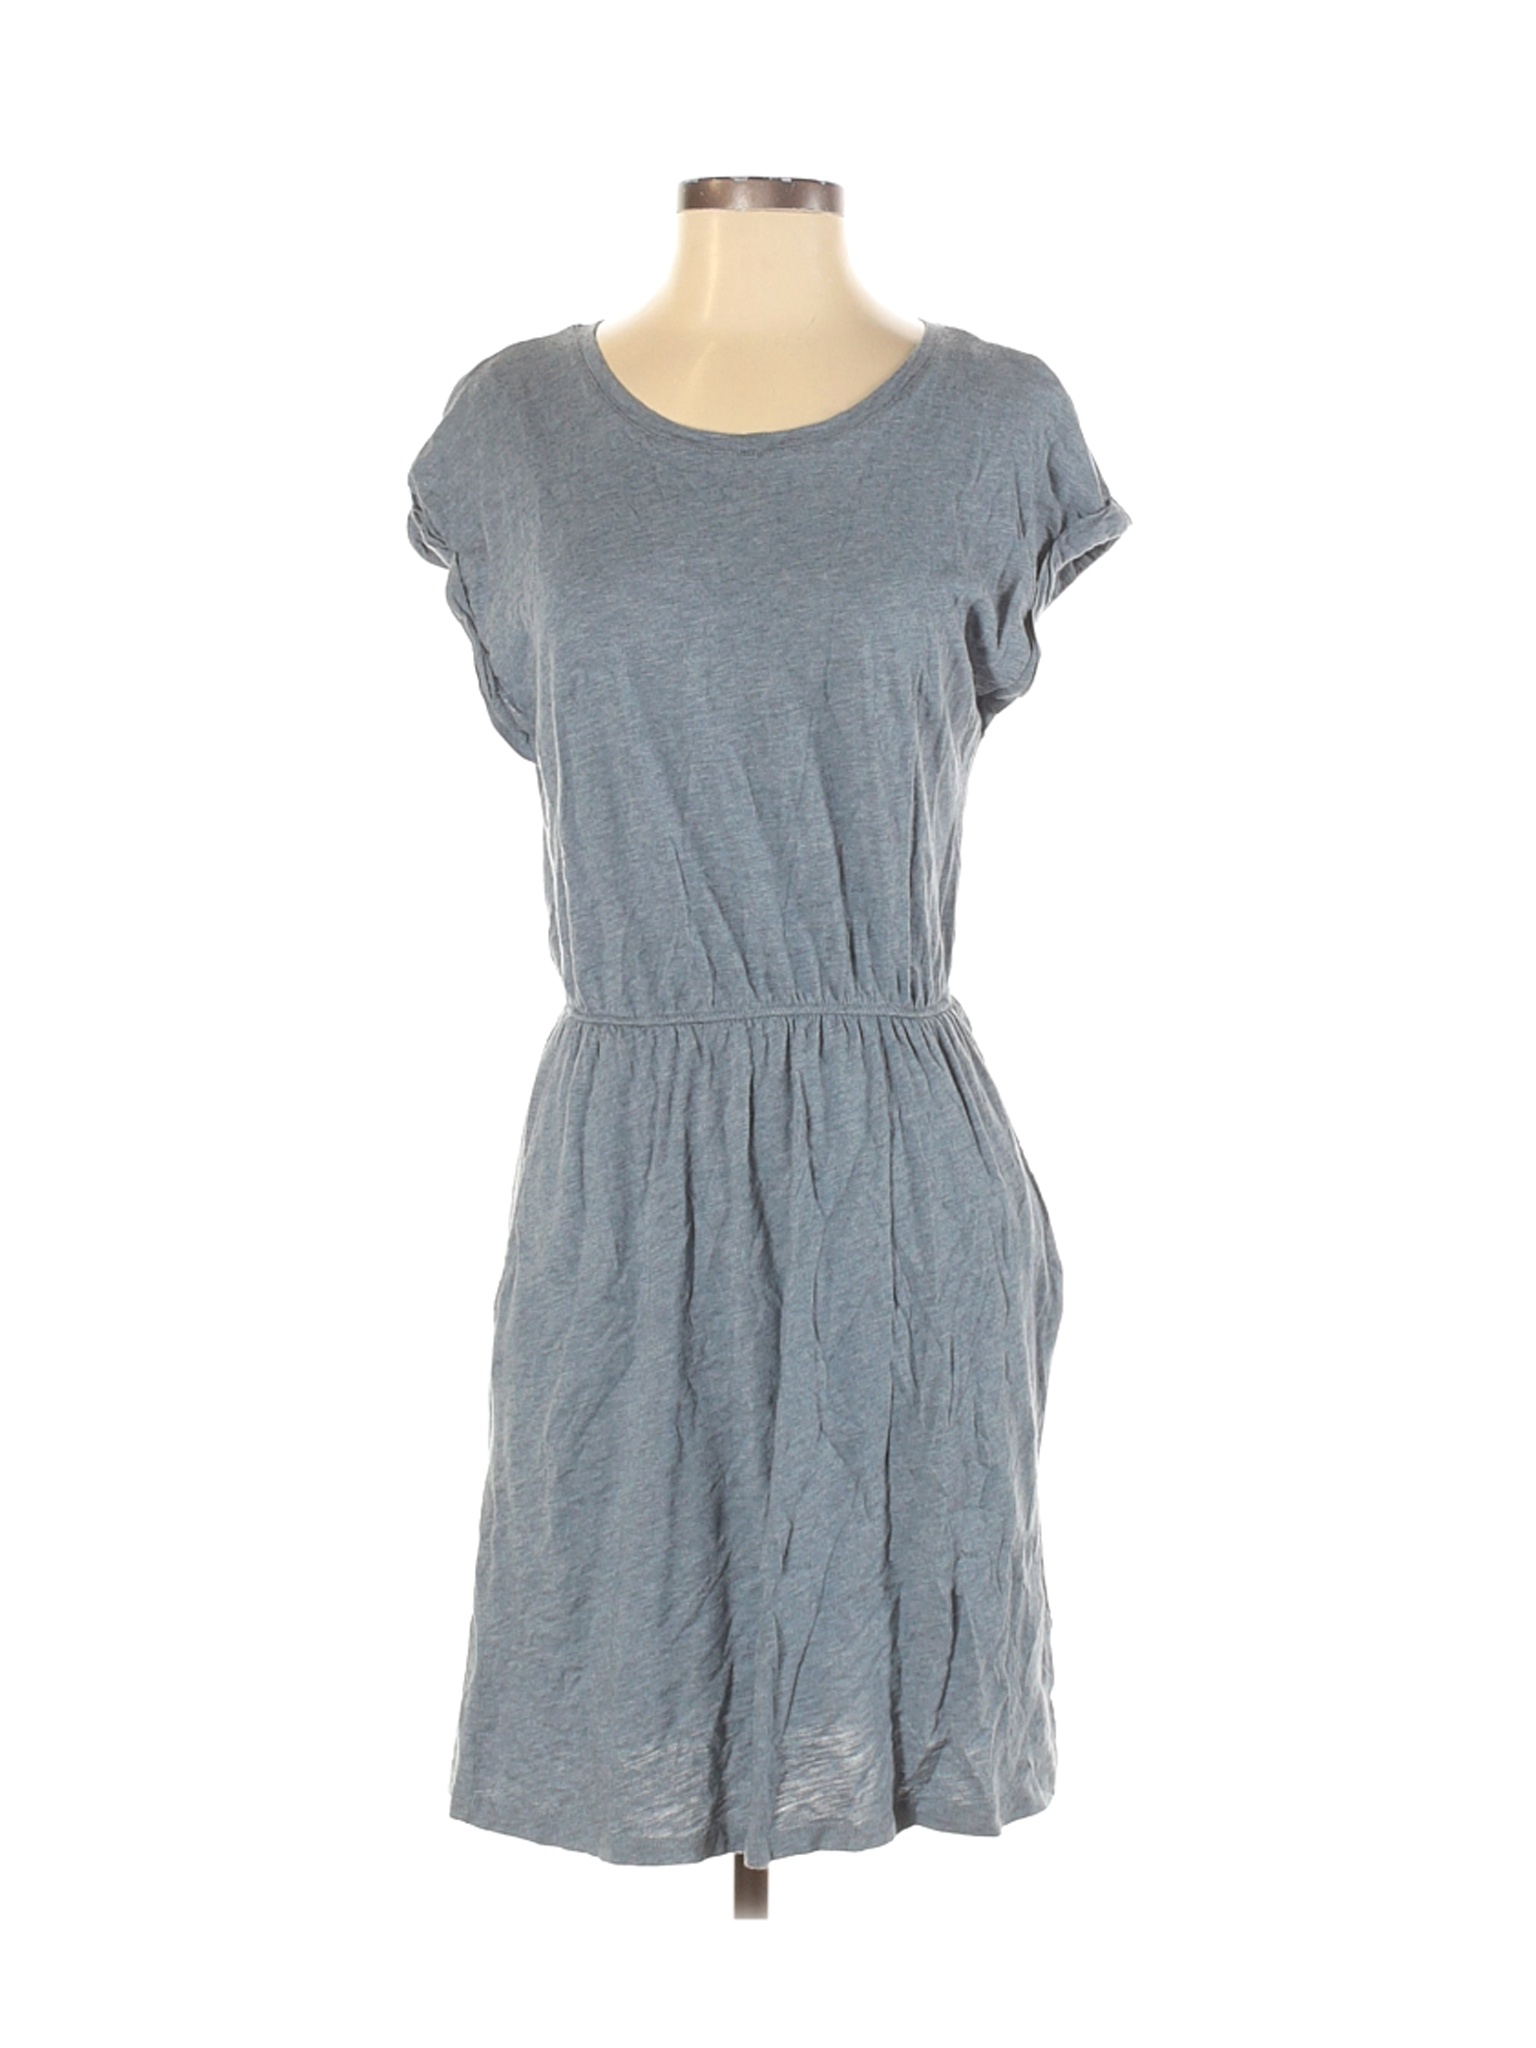 H&M Women Gray Casual Dress S | eBay